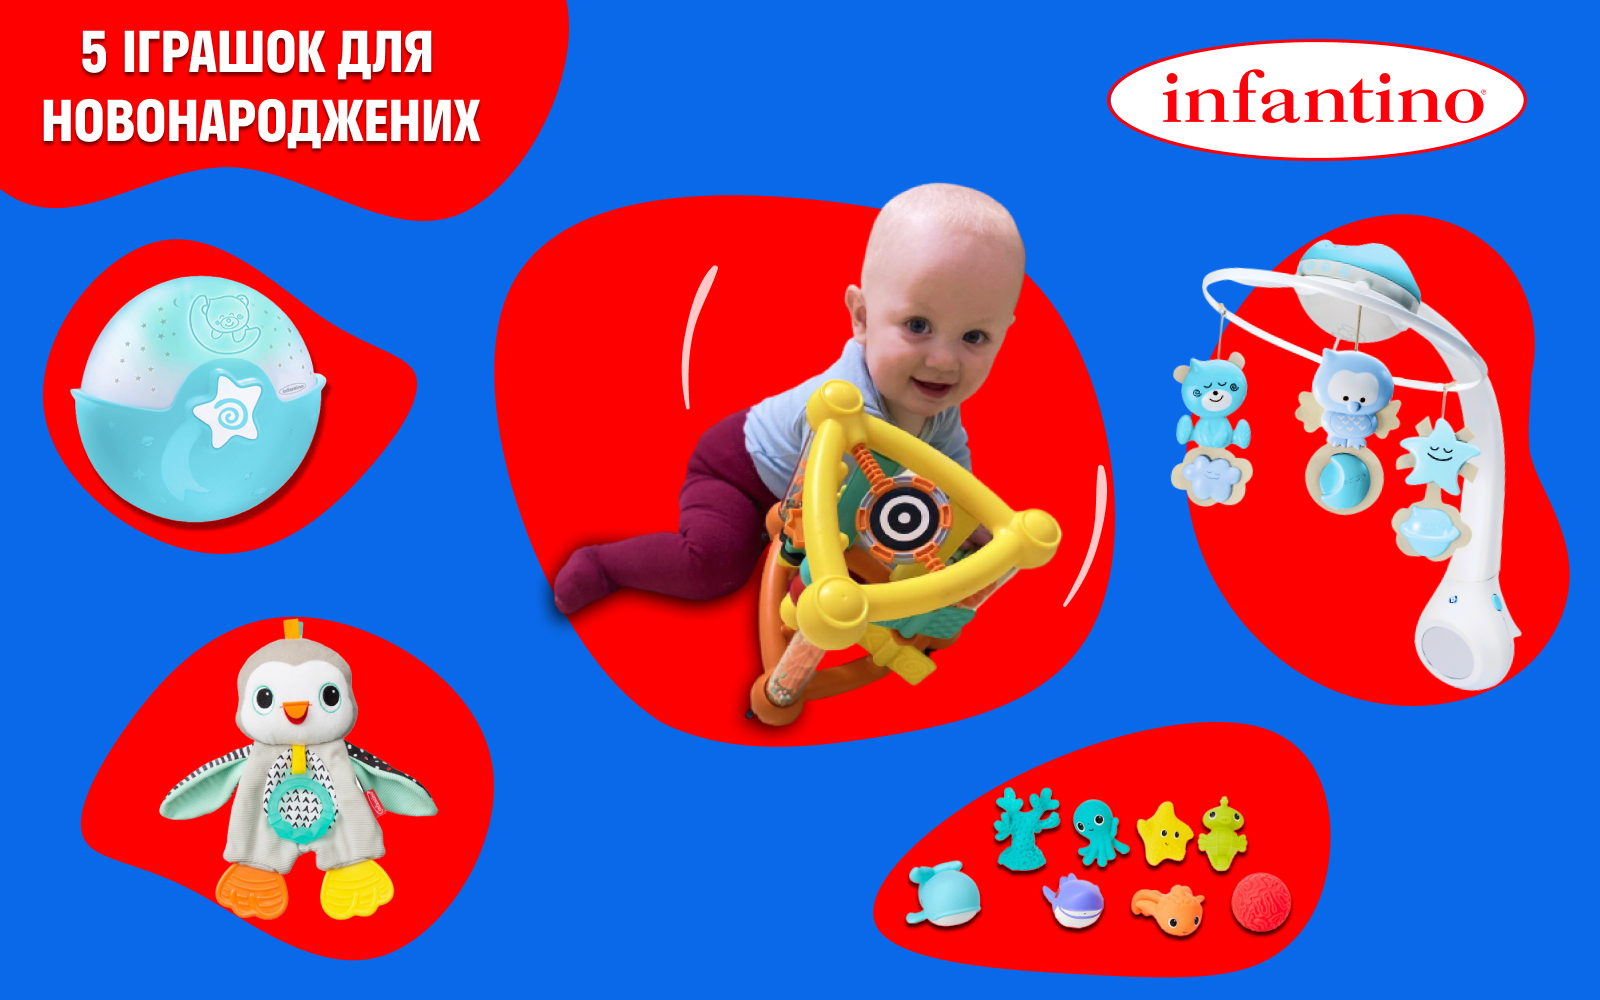 5 toys for newborns